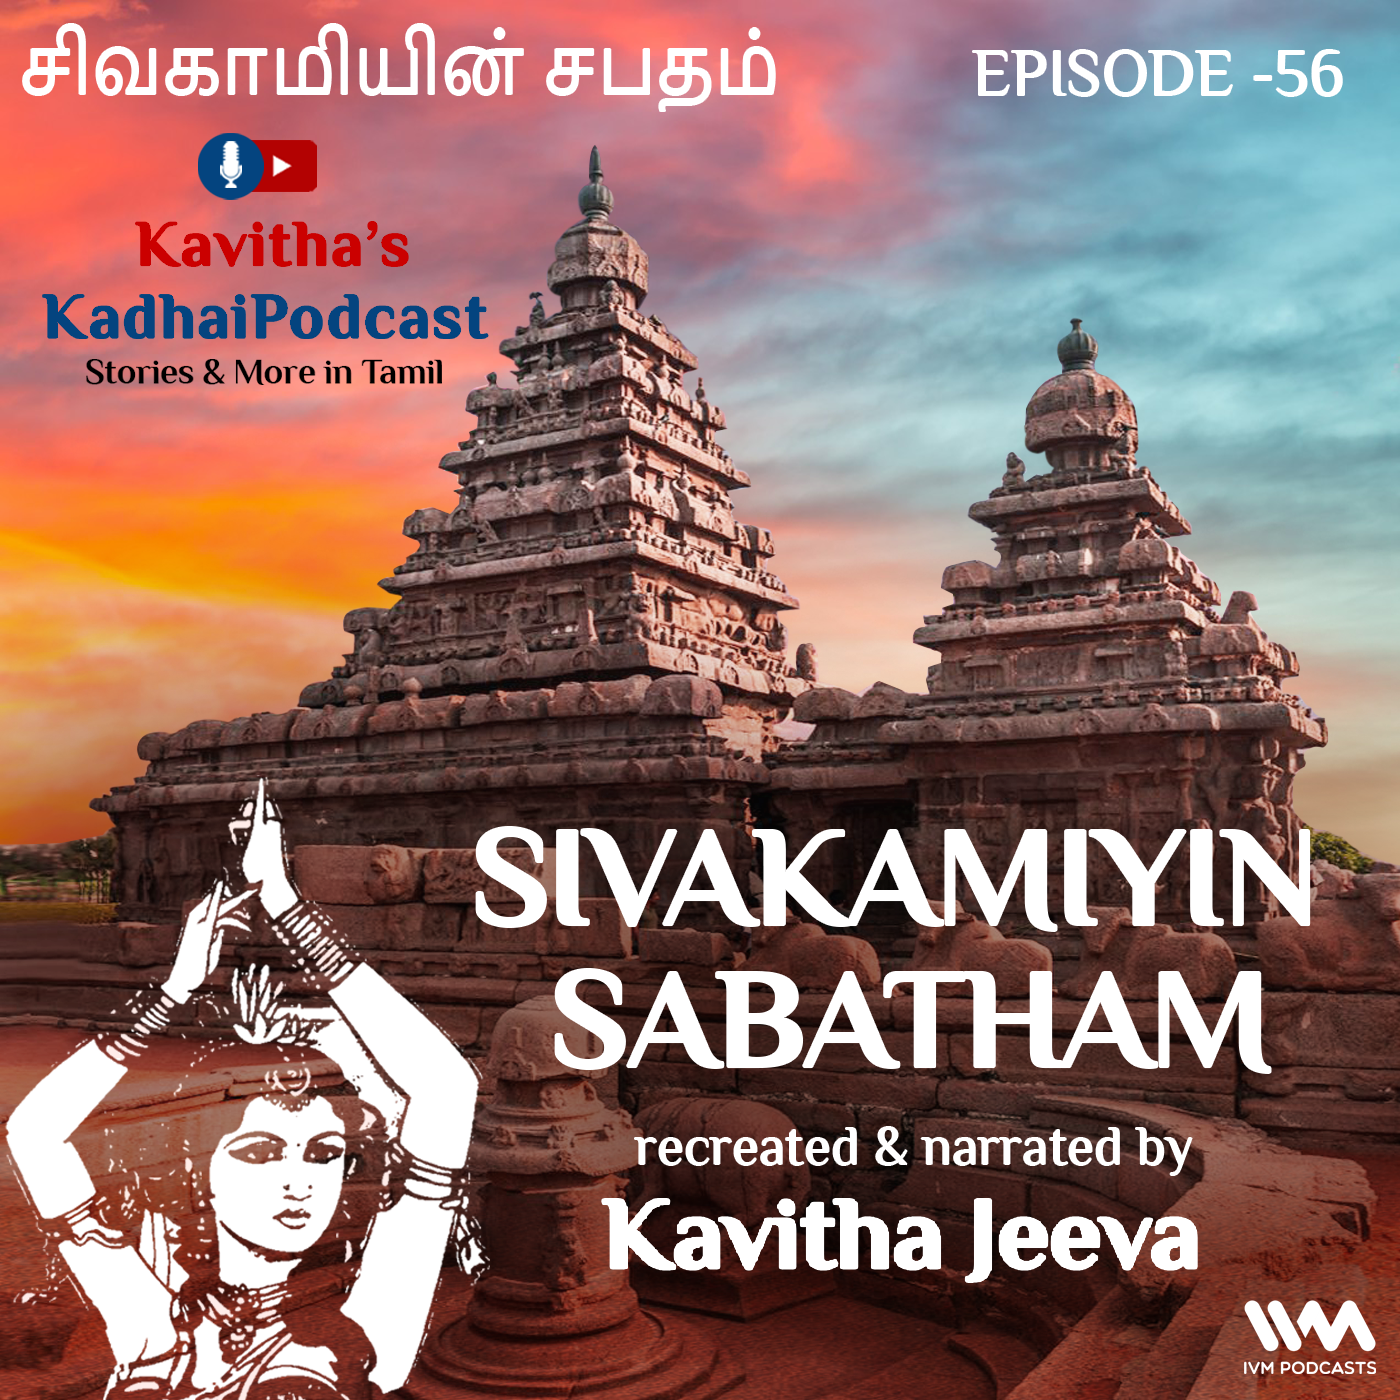 KadhaiPodcast's Sivakamiyin Sabatham - Episode # 56